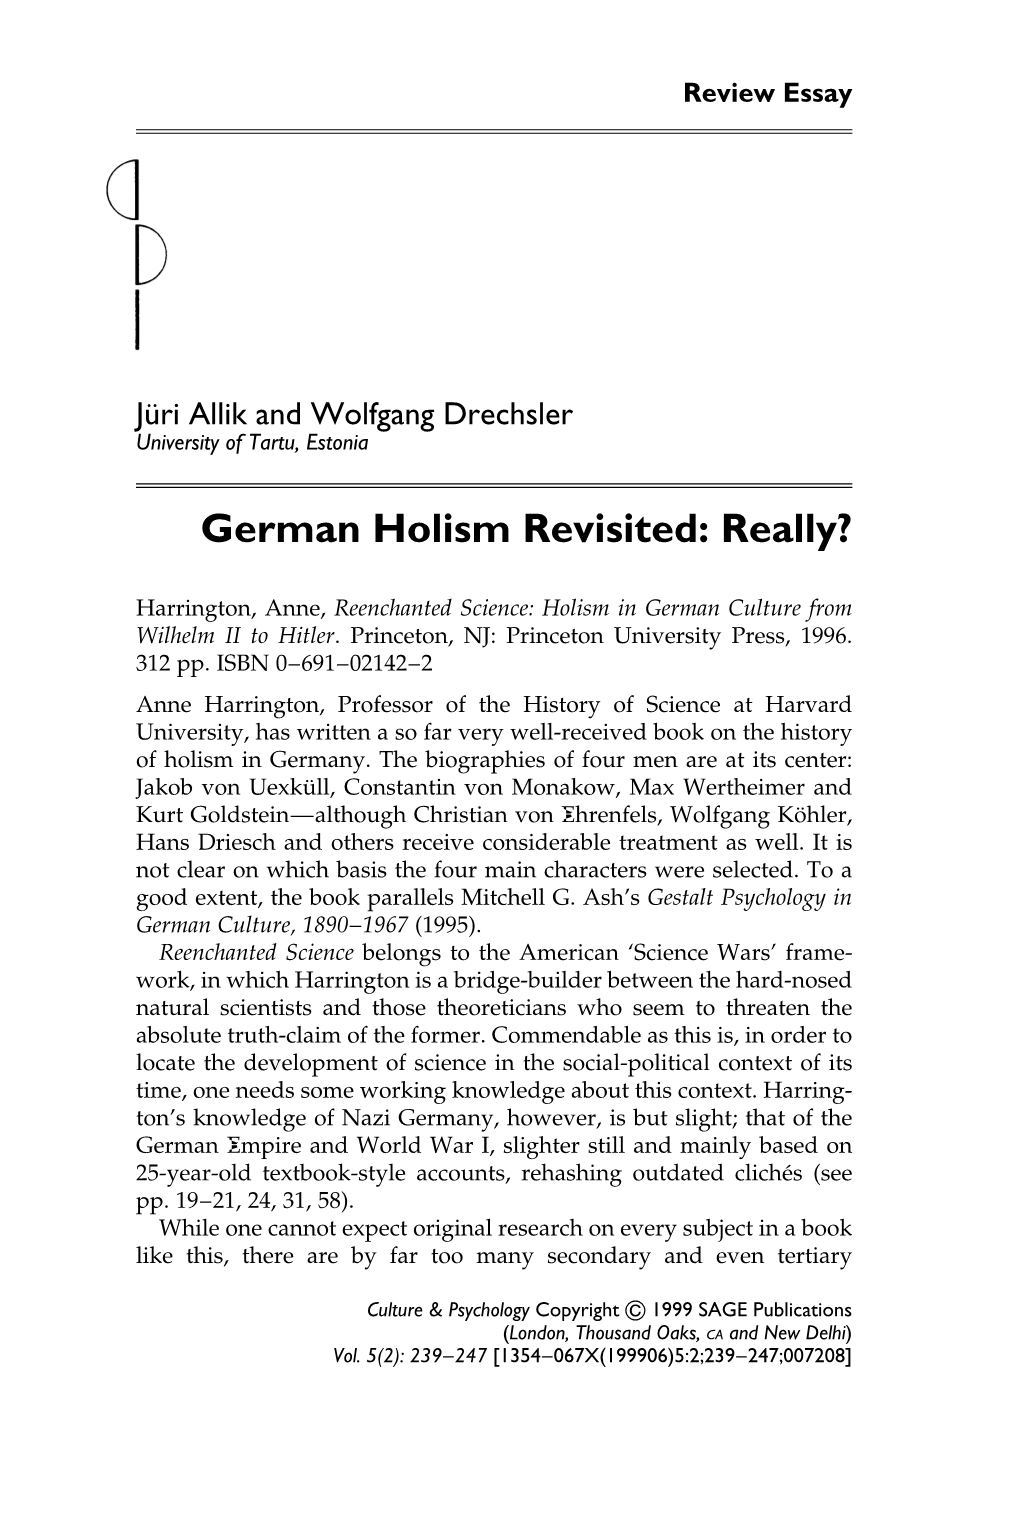 German Holism Revisited: Really?